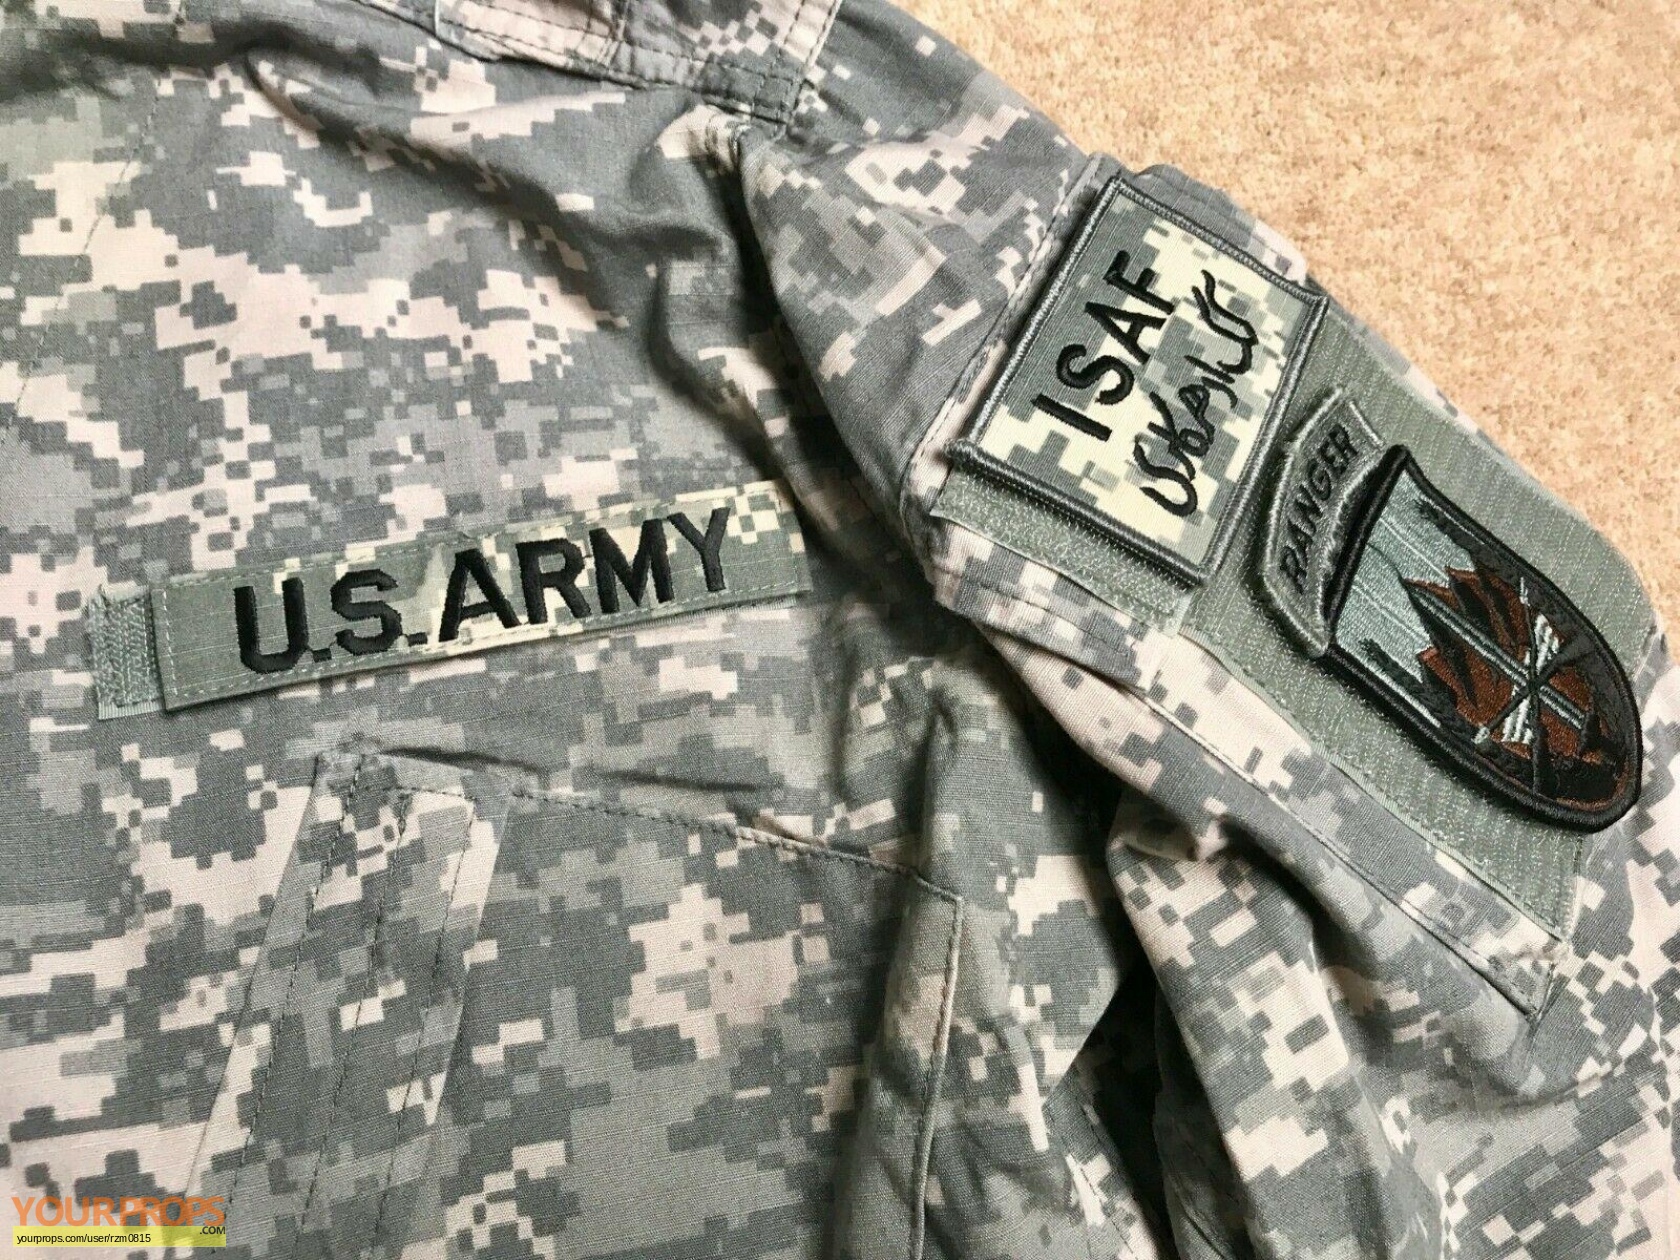 War Machine GREG PULVER's US Army fatigues shirt original movie costume